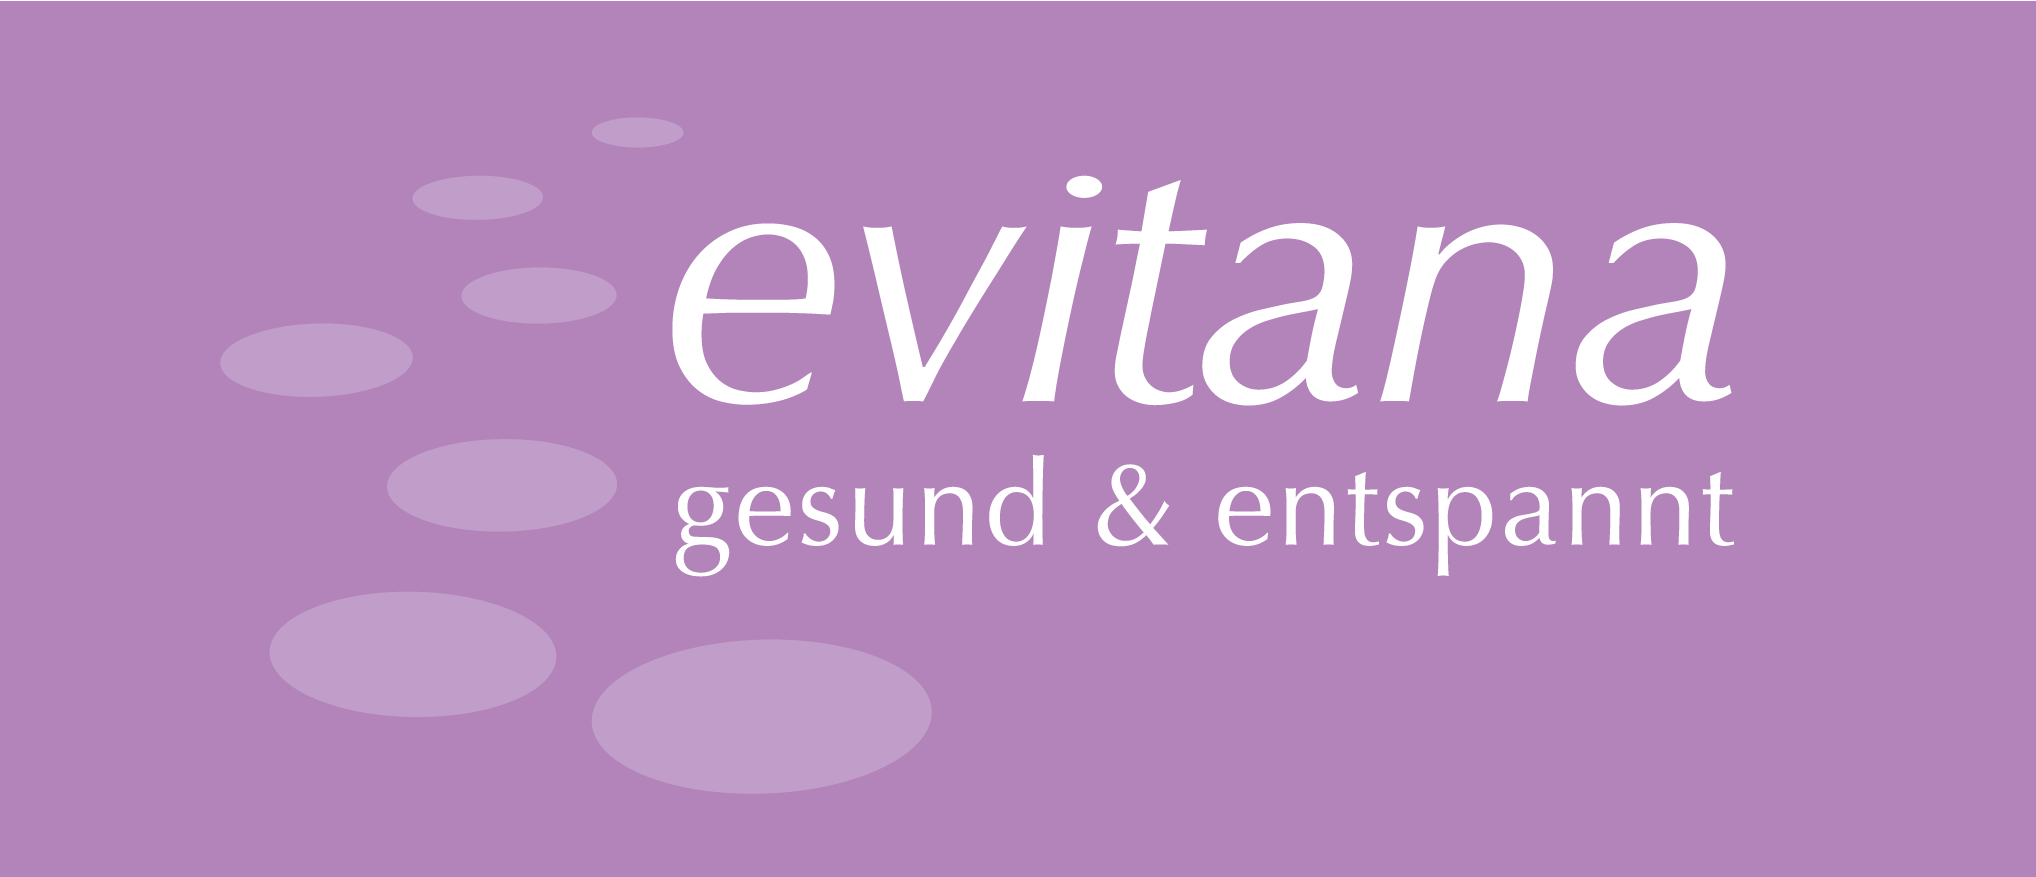 Evitana Logo